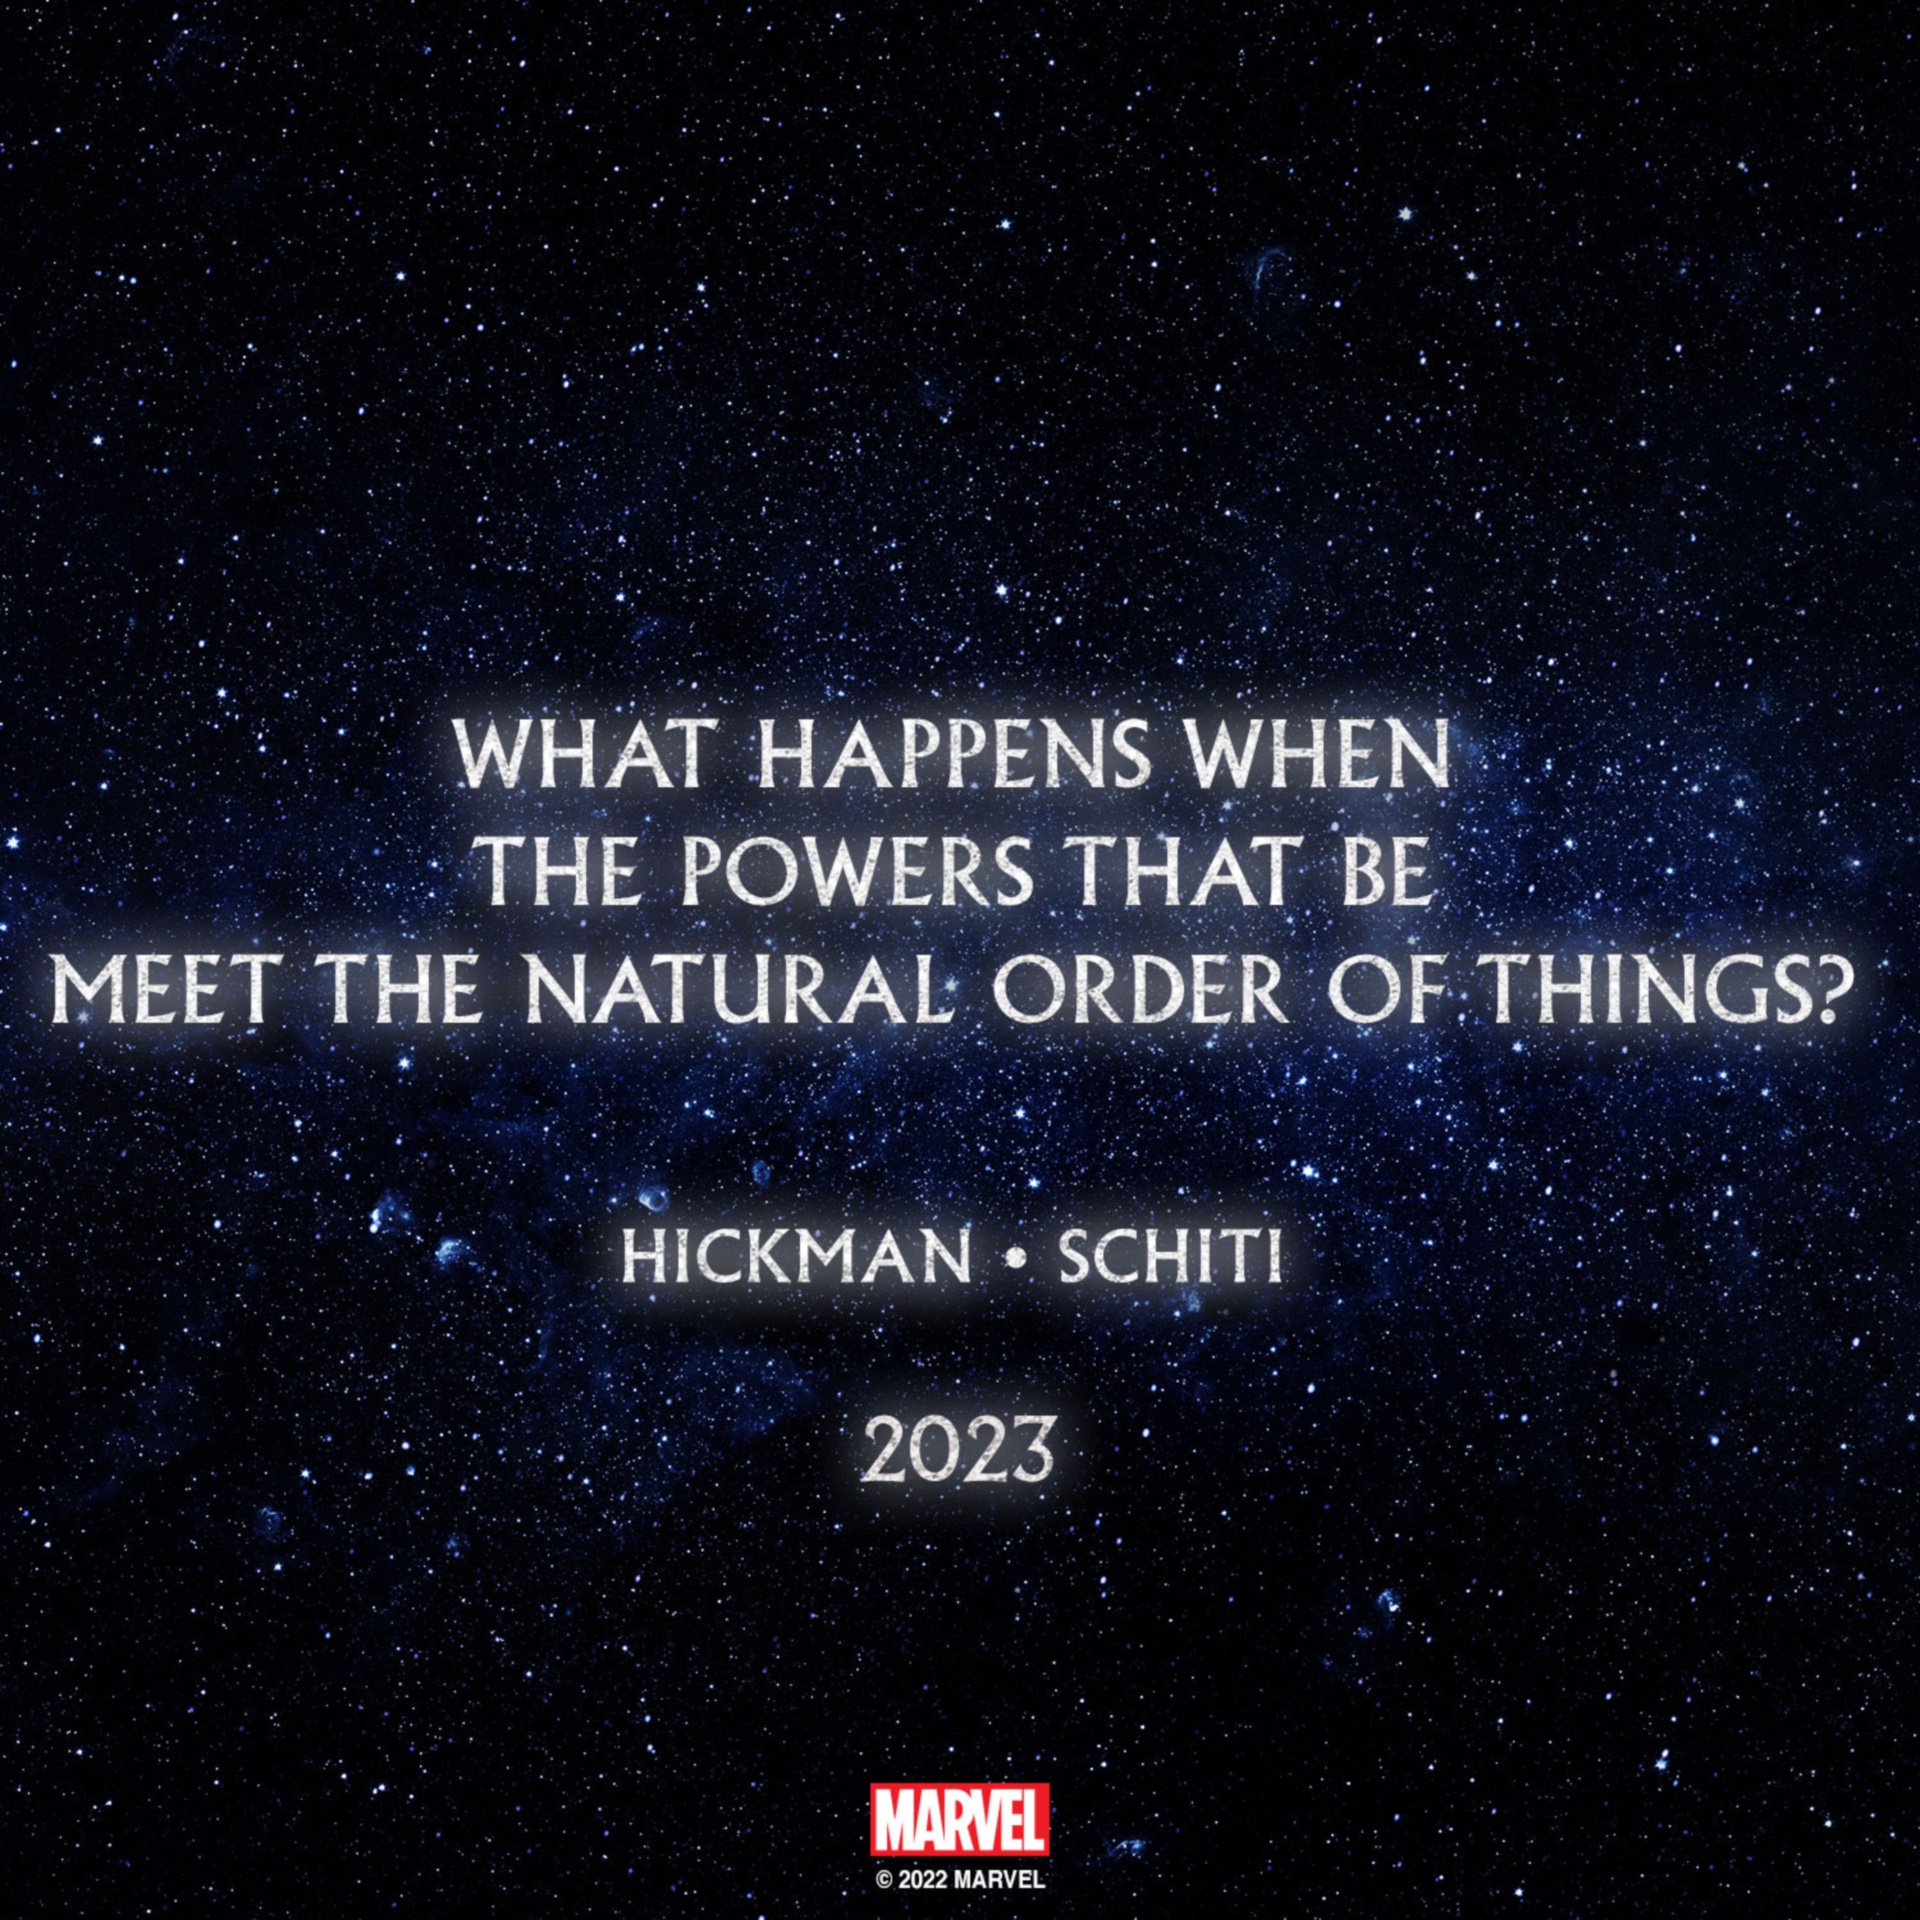 Hickman Schiti 2023 teaser